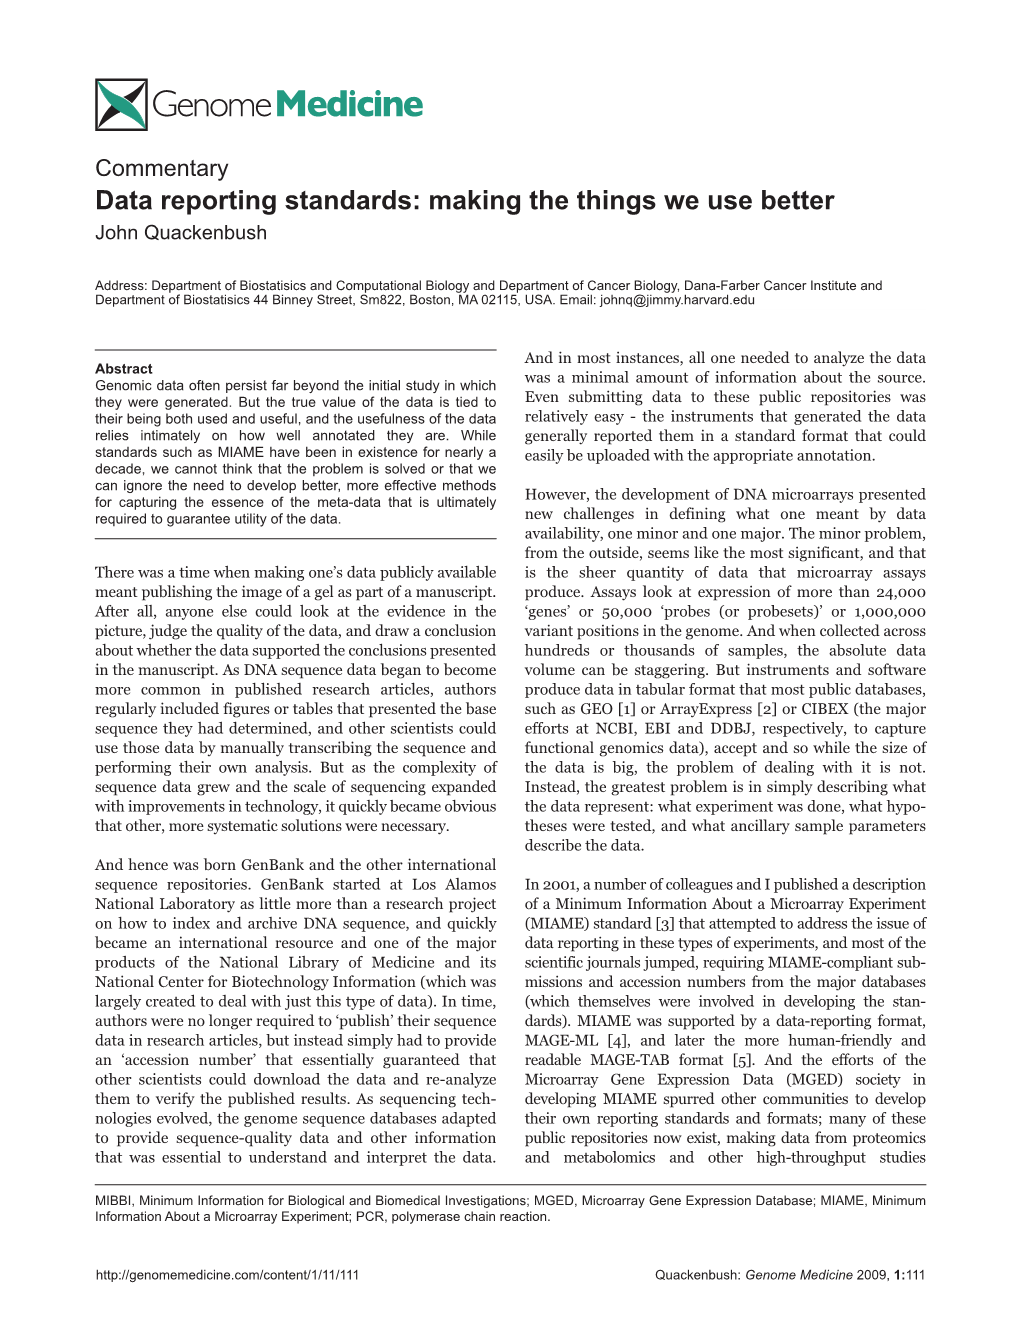 Data Reporting Standards: Making the Things We Use Better John Quackenbush